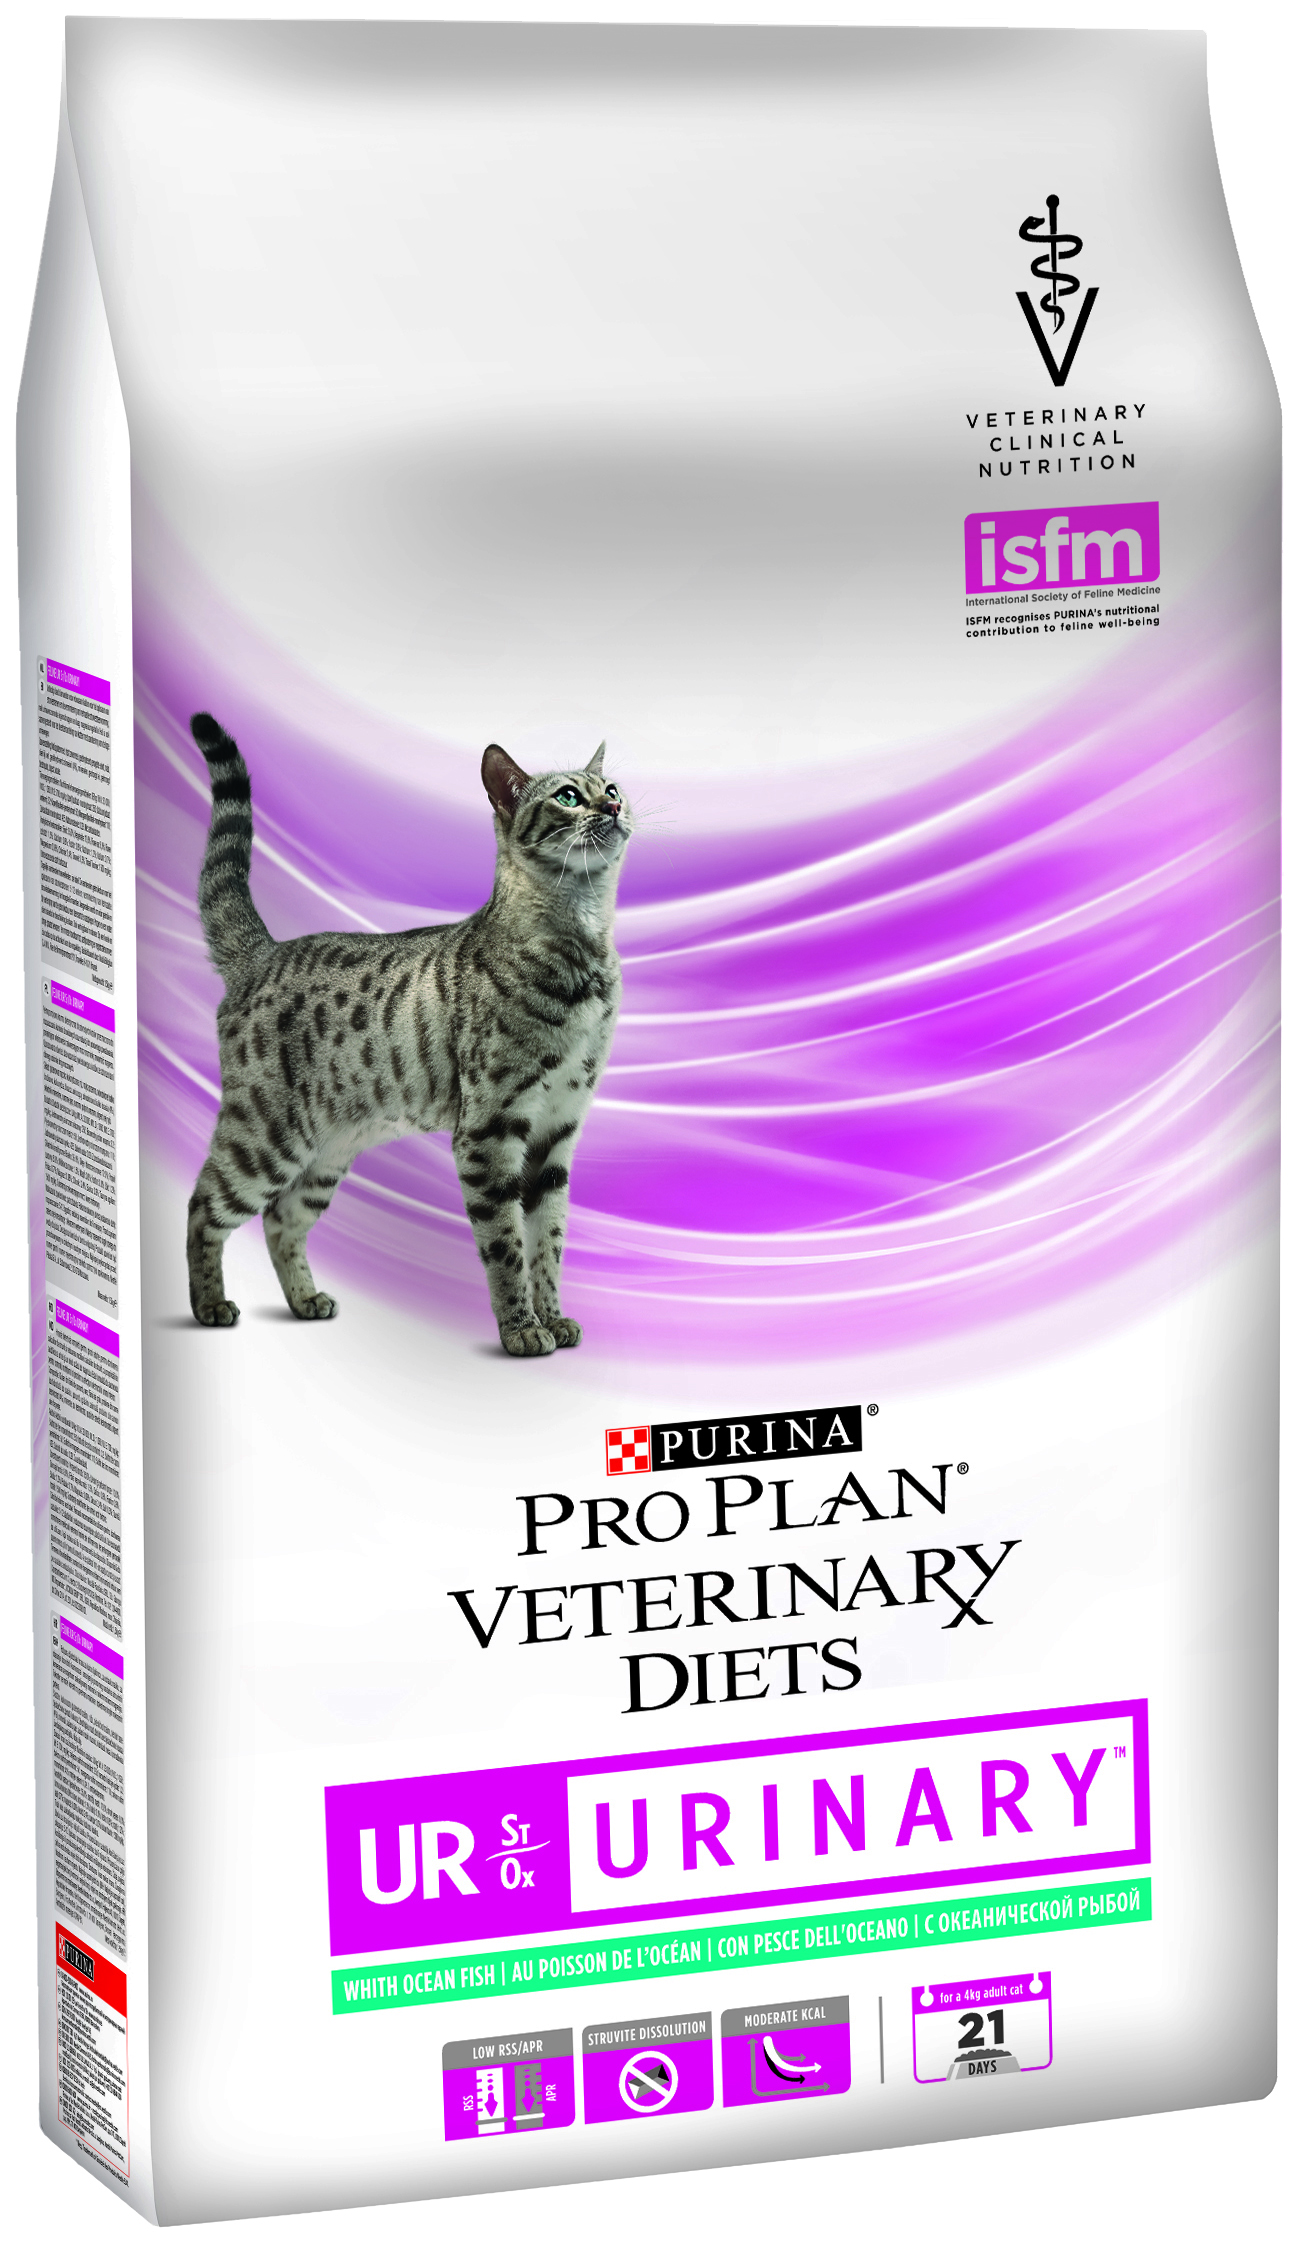 Сухой корм для кошек Pro Plan Veterinary Diets UR Urinary, при МКБ, рыба, 1,5кг